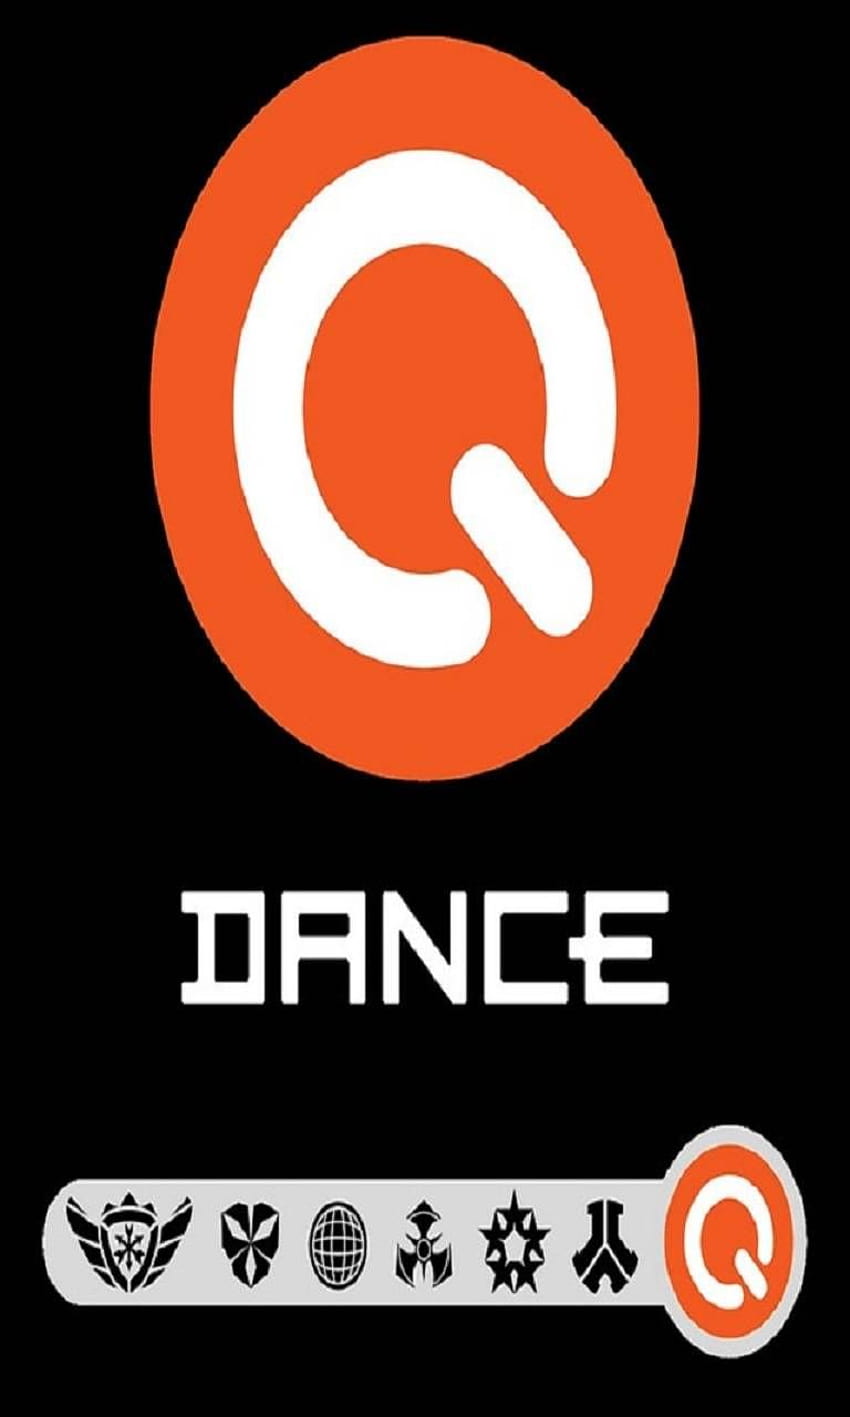 q dance HD phone wallpaper